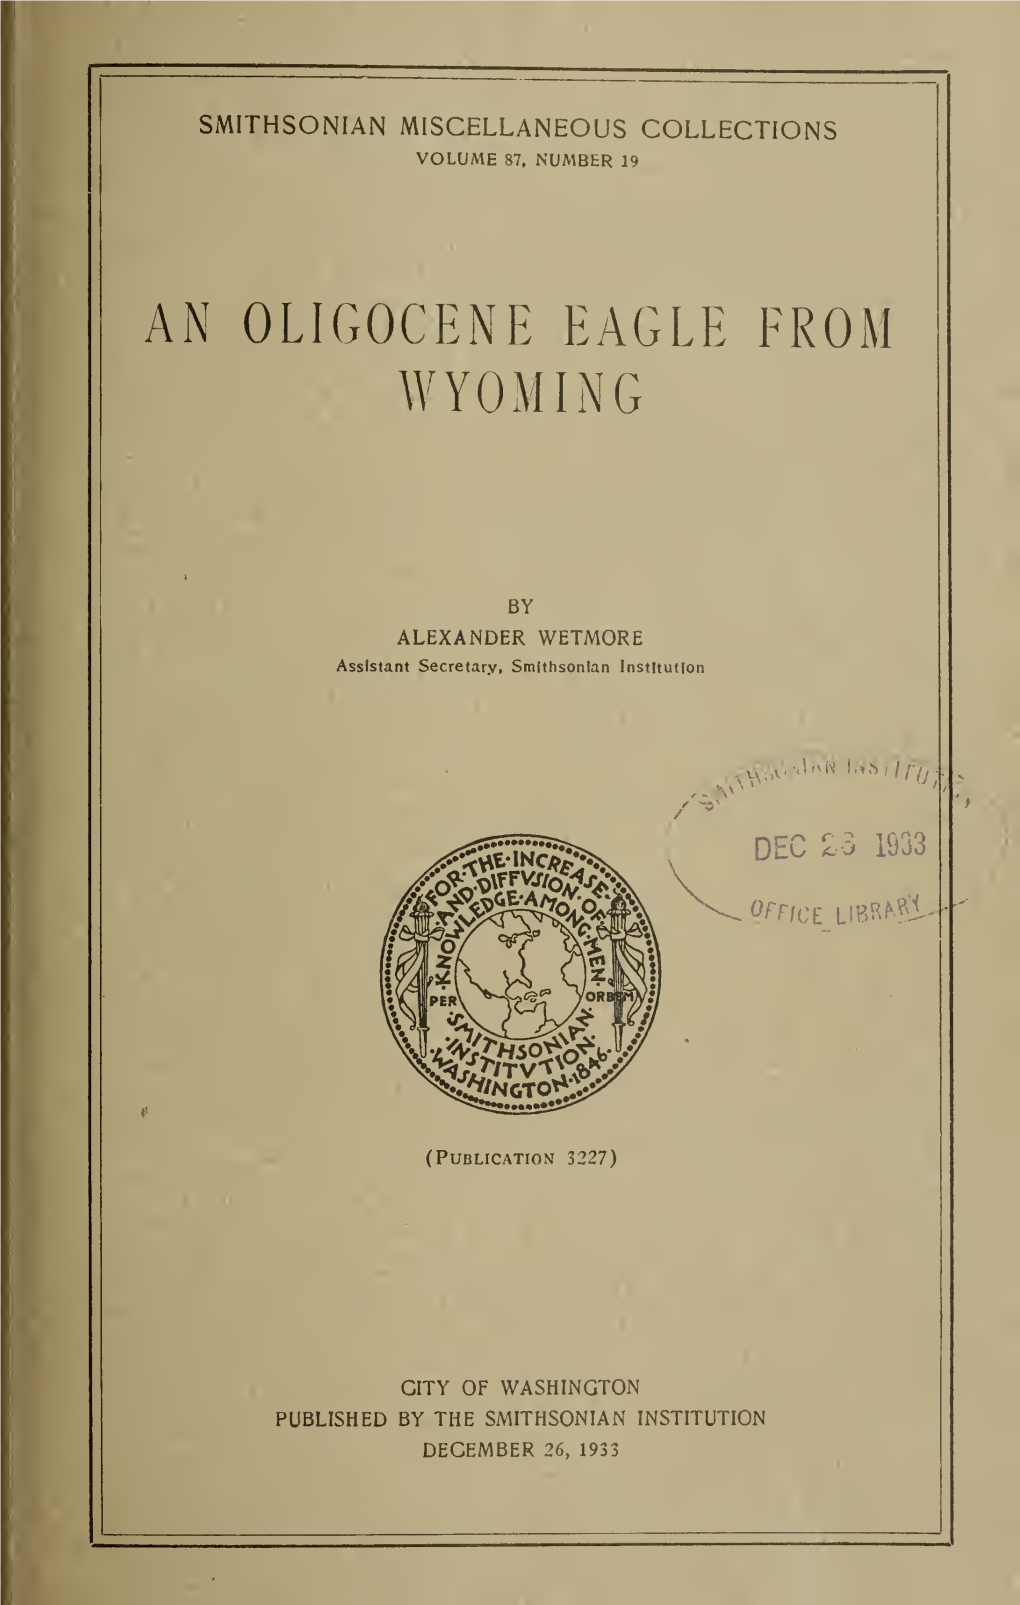 An Oligocene Eagle from Wyoming